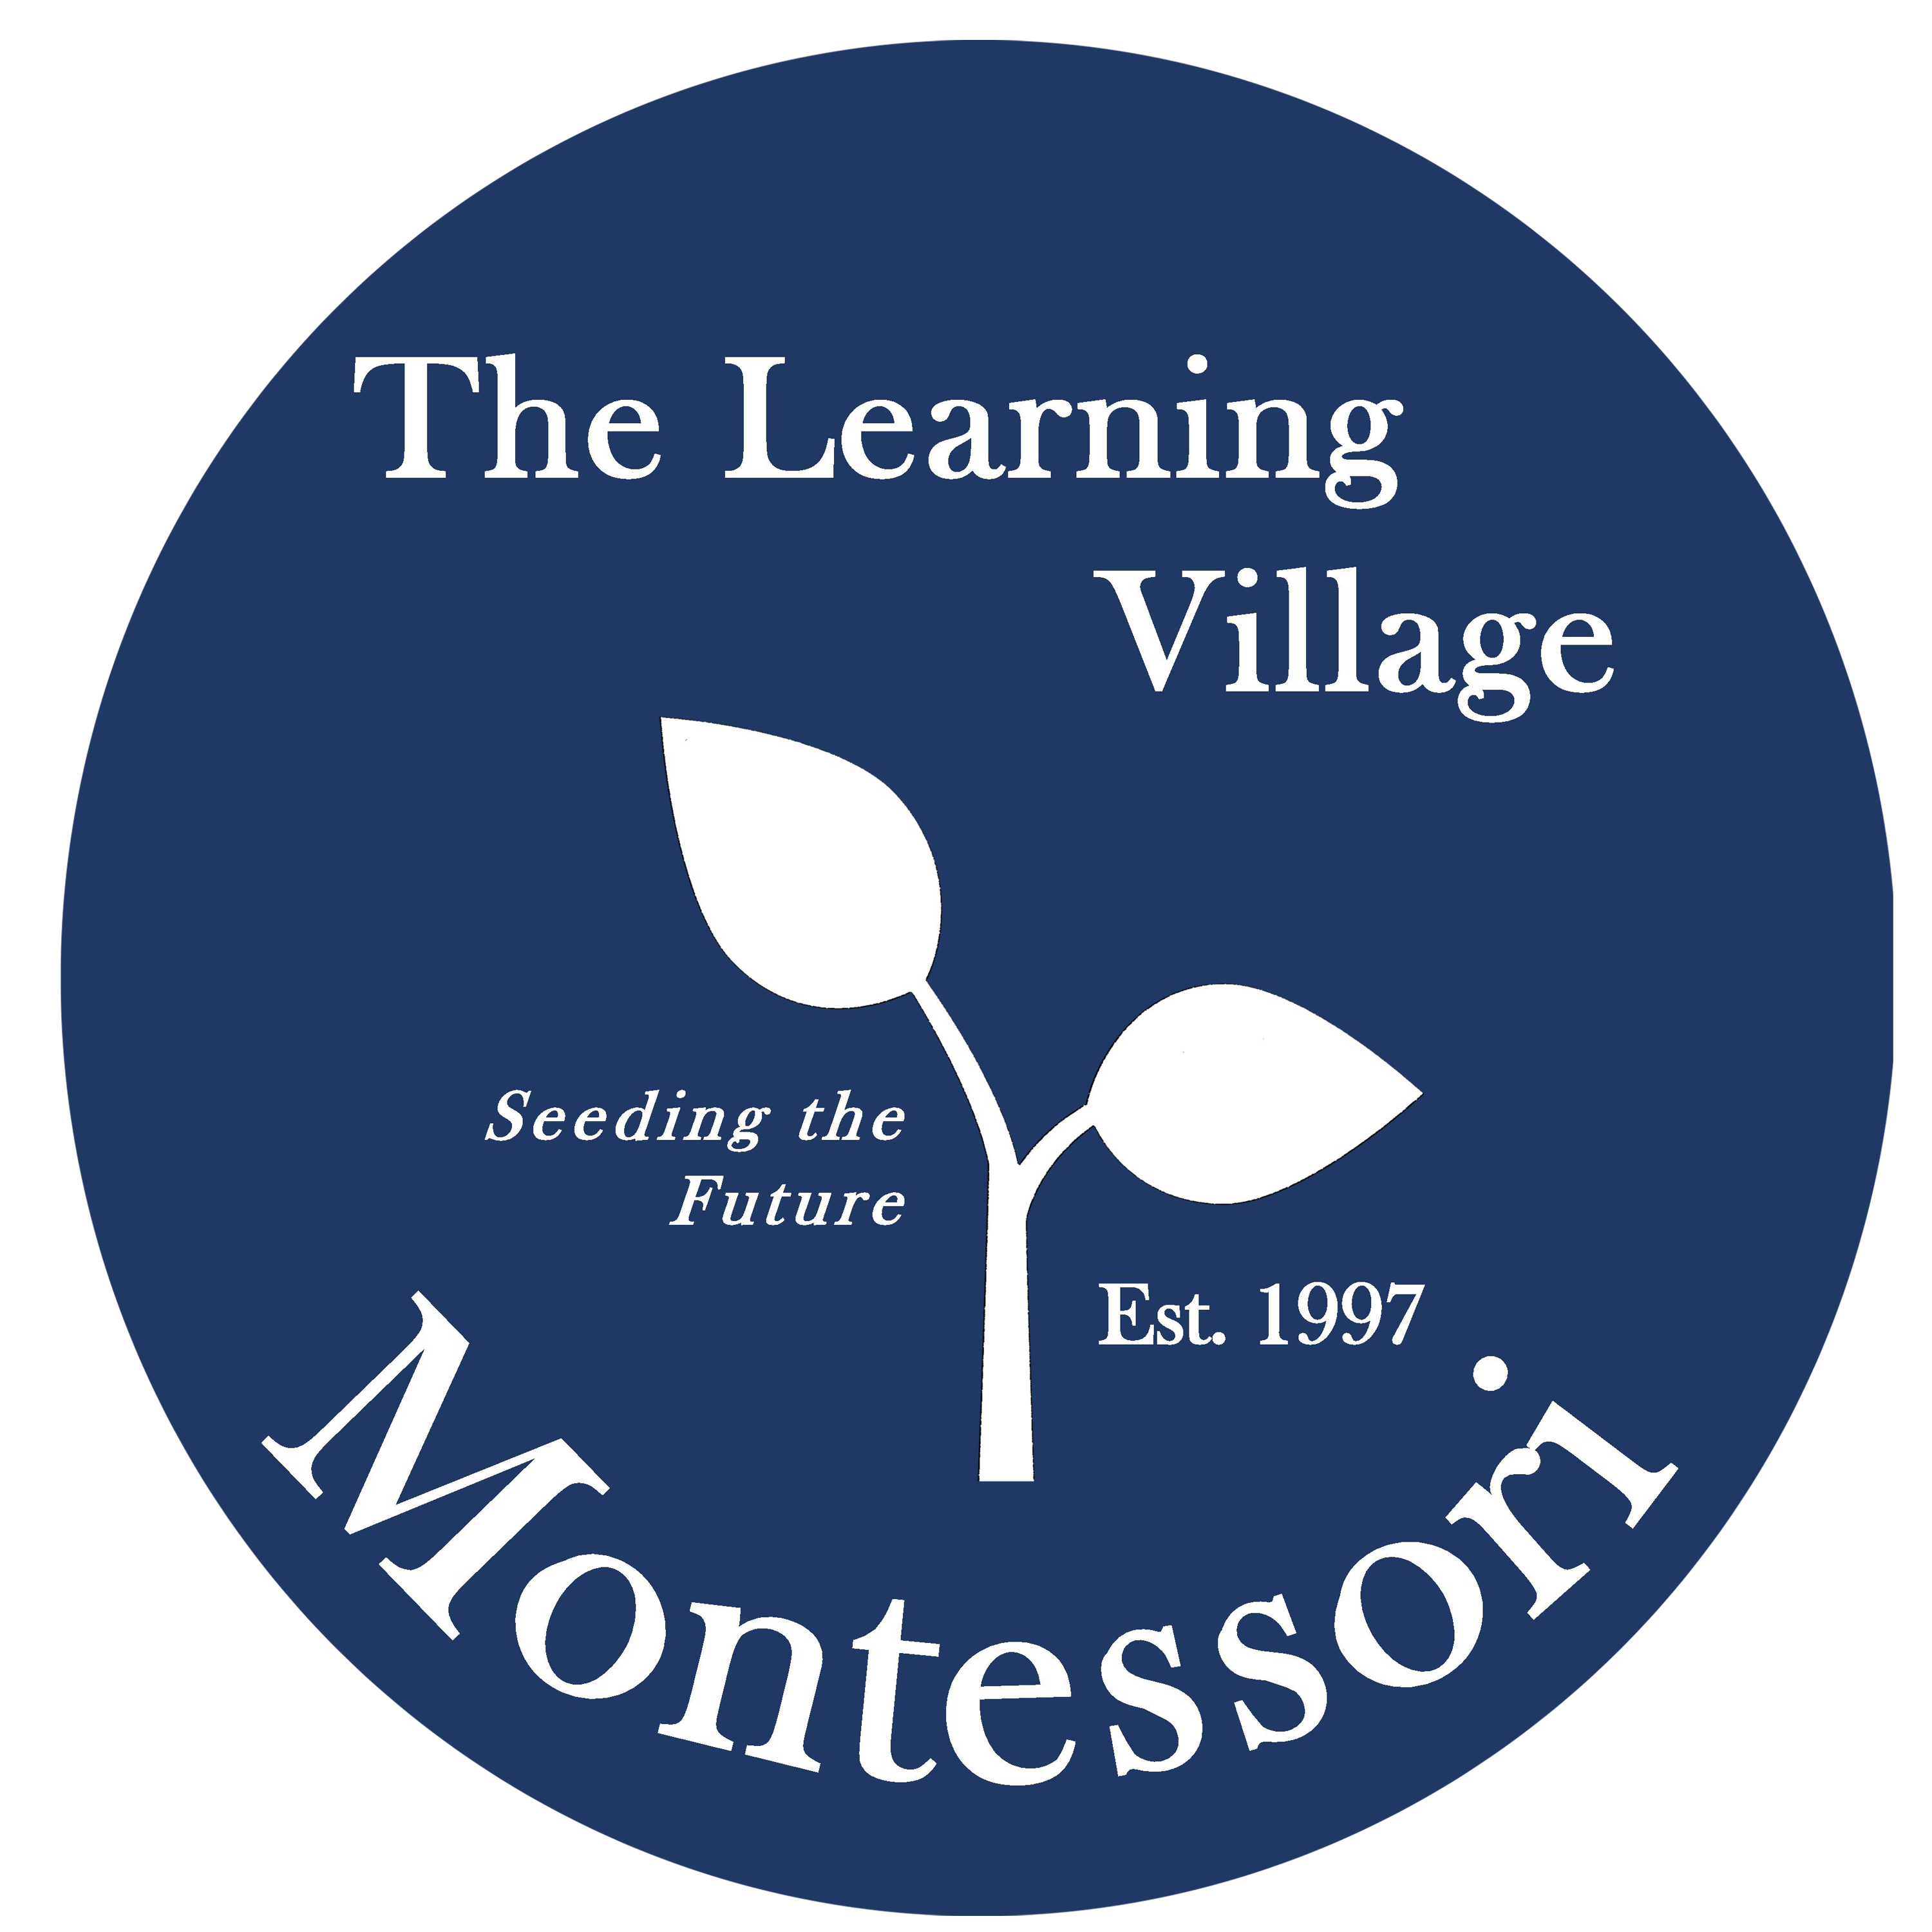 Learning Village logo